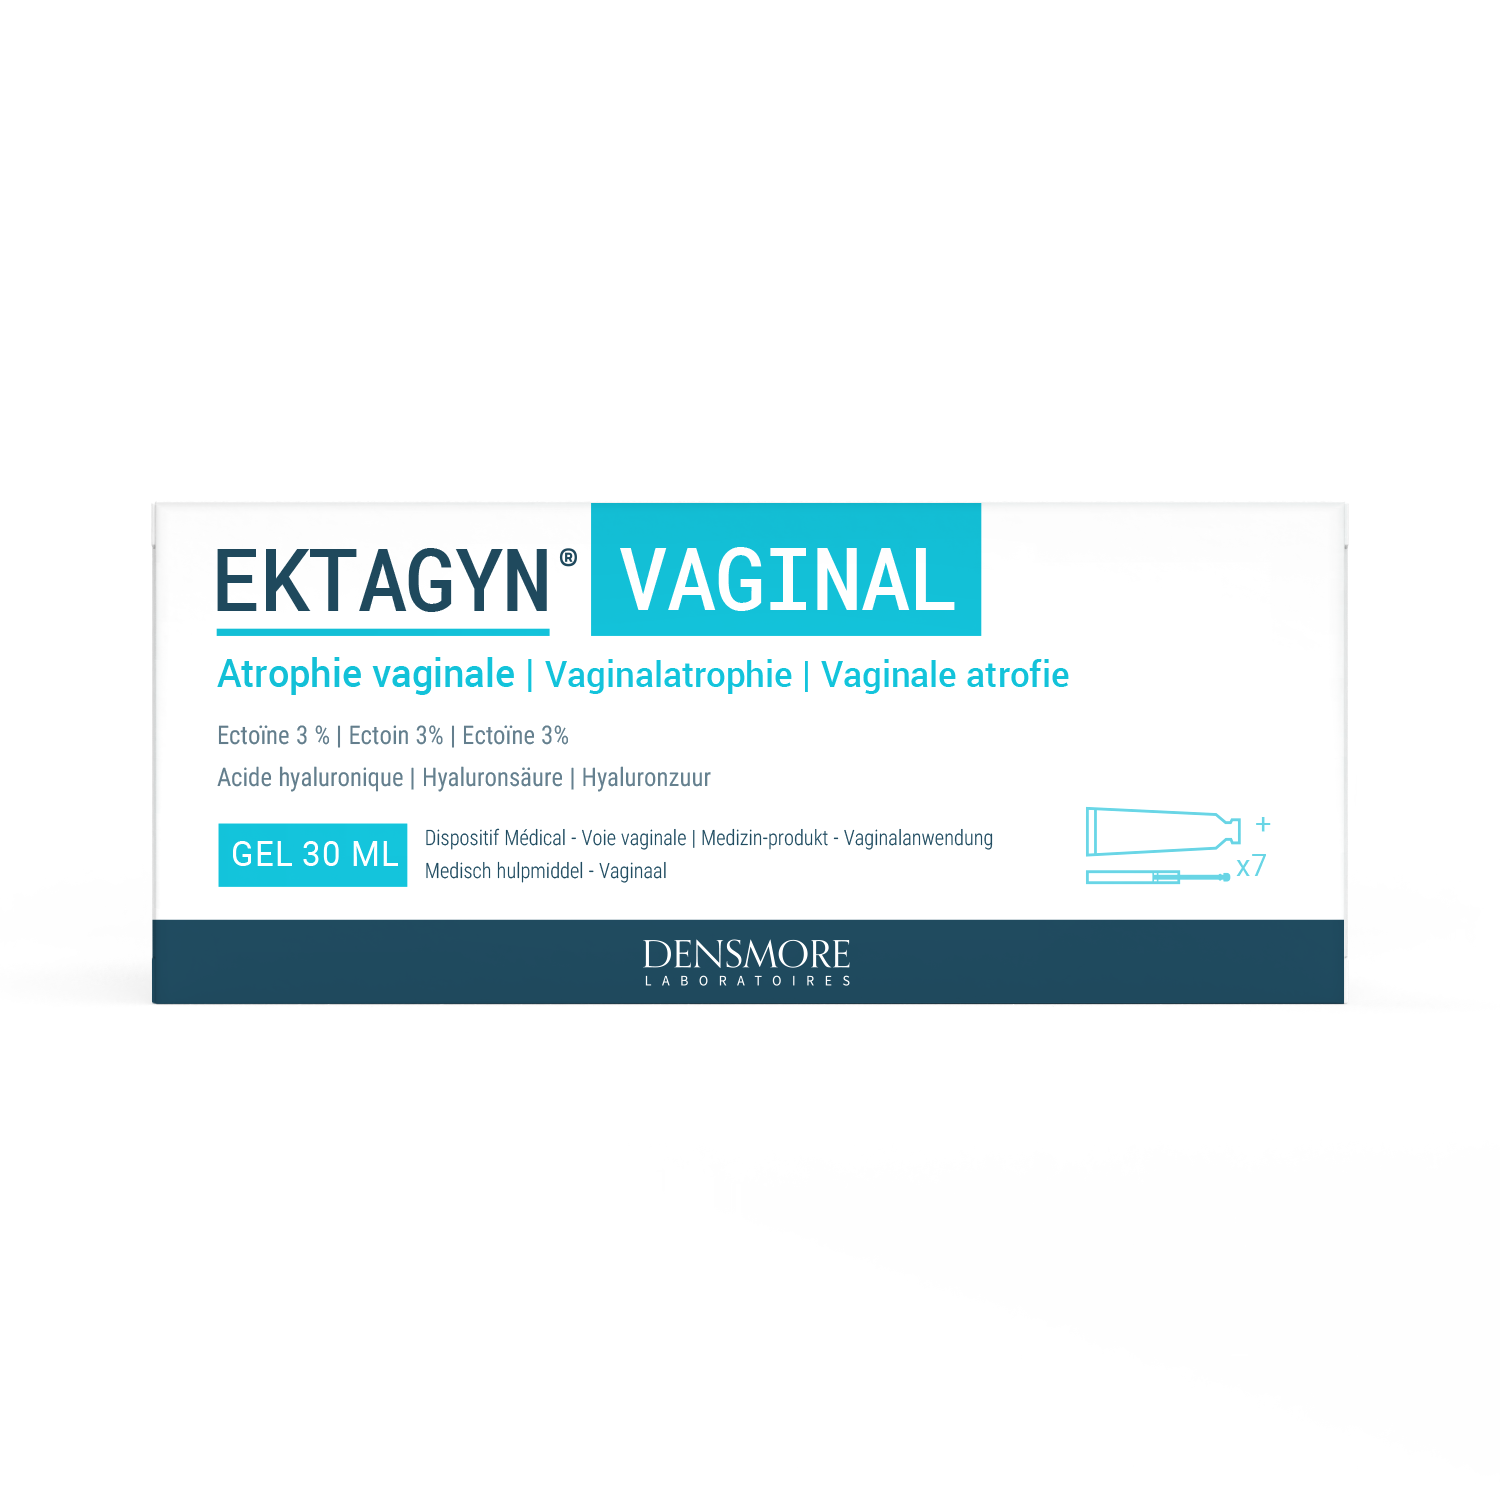 Ektagyn® Vaginal